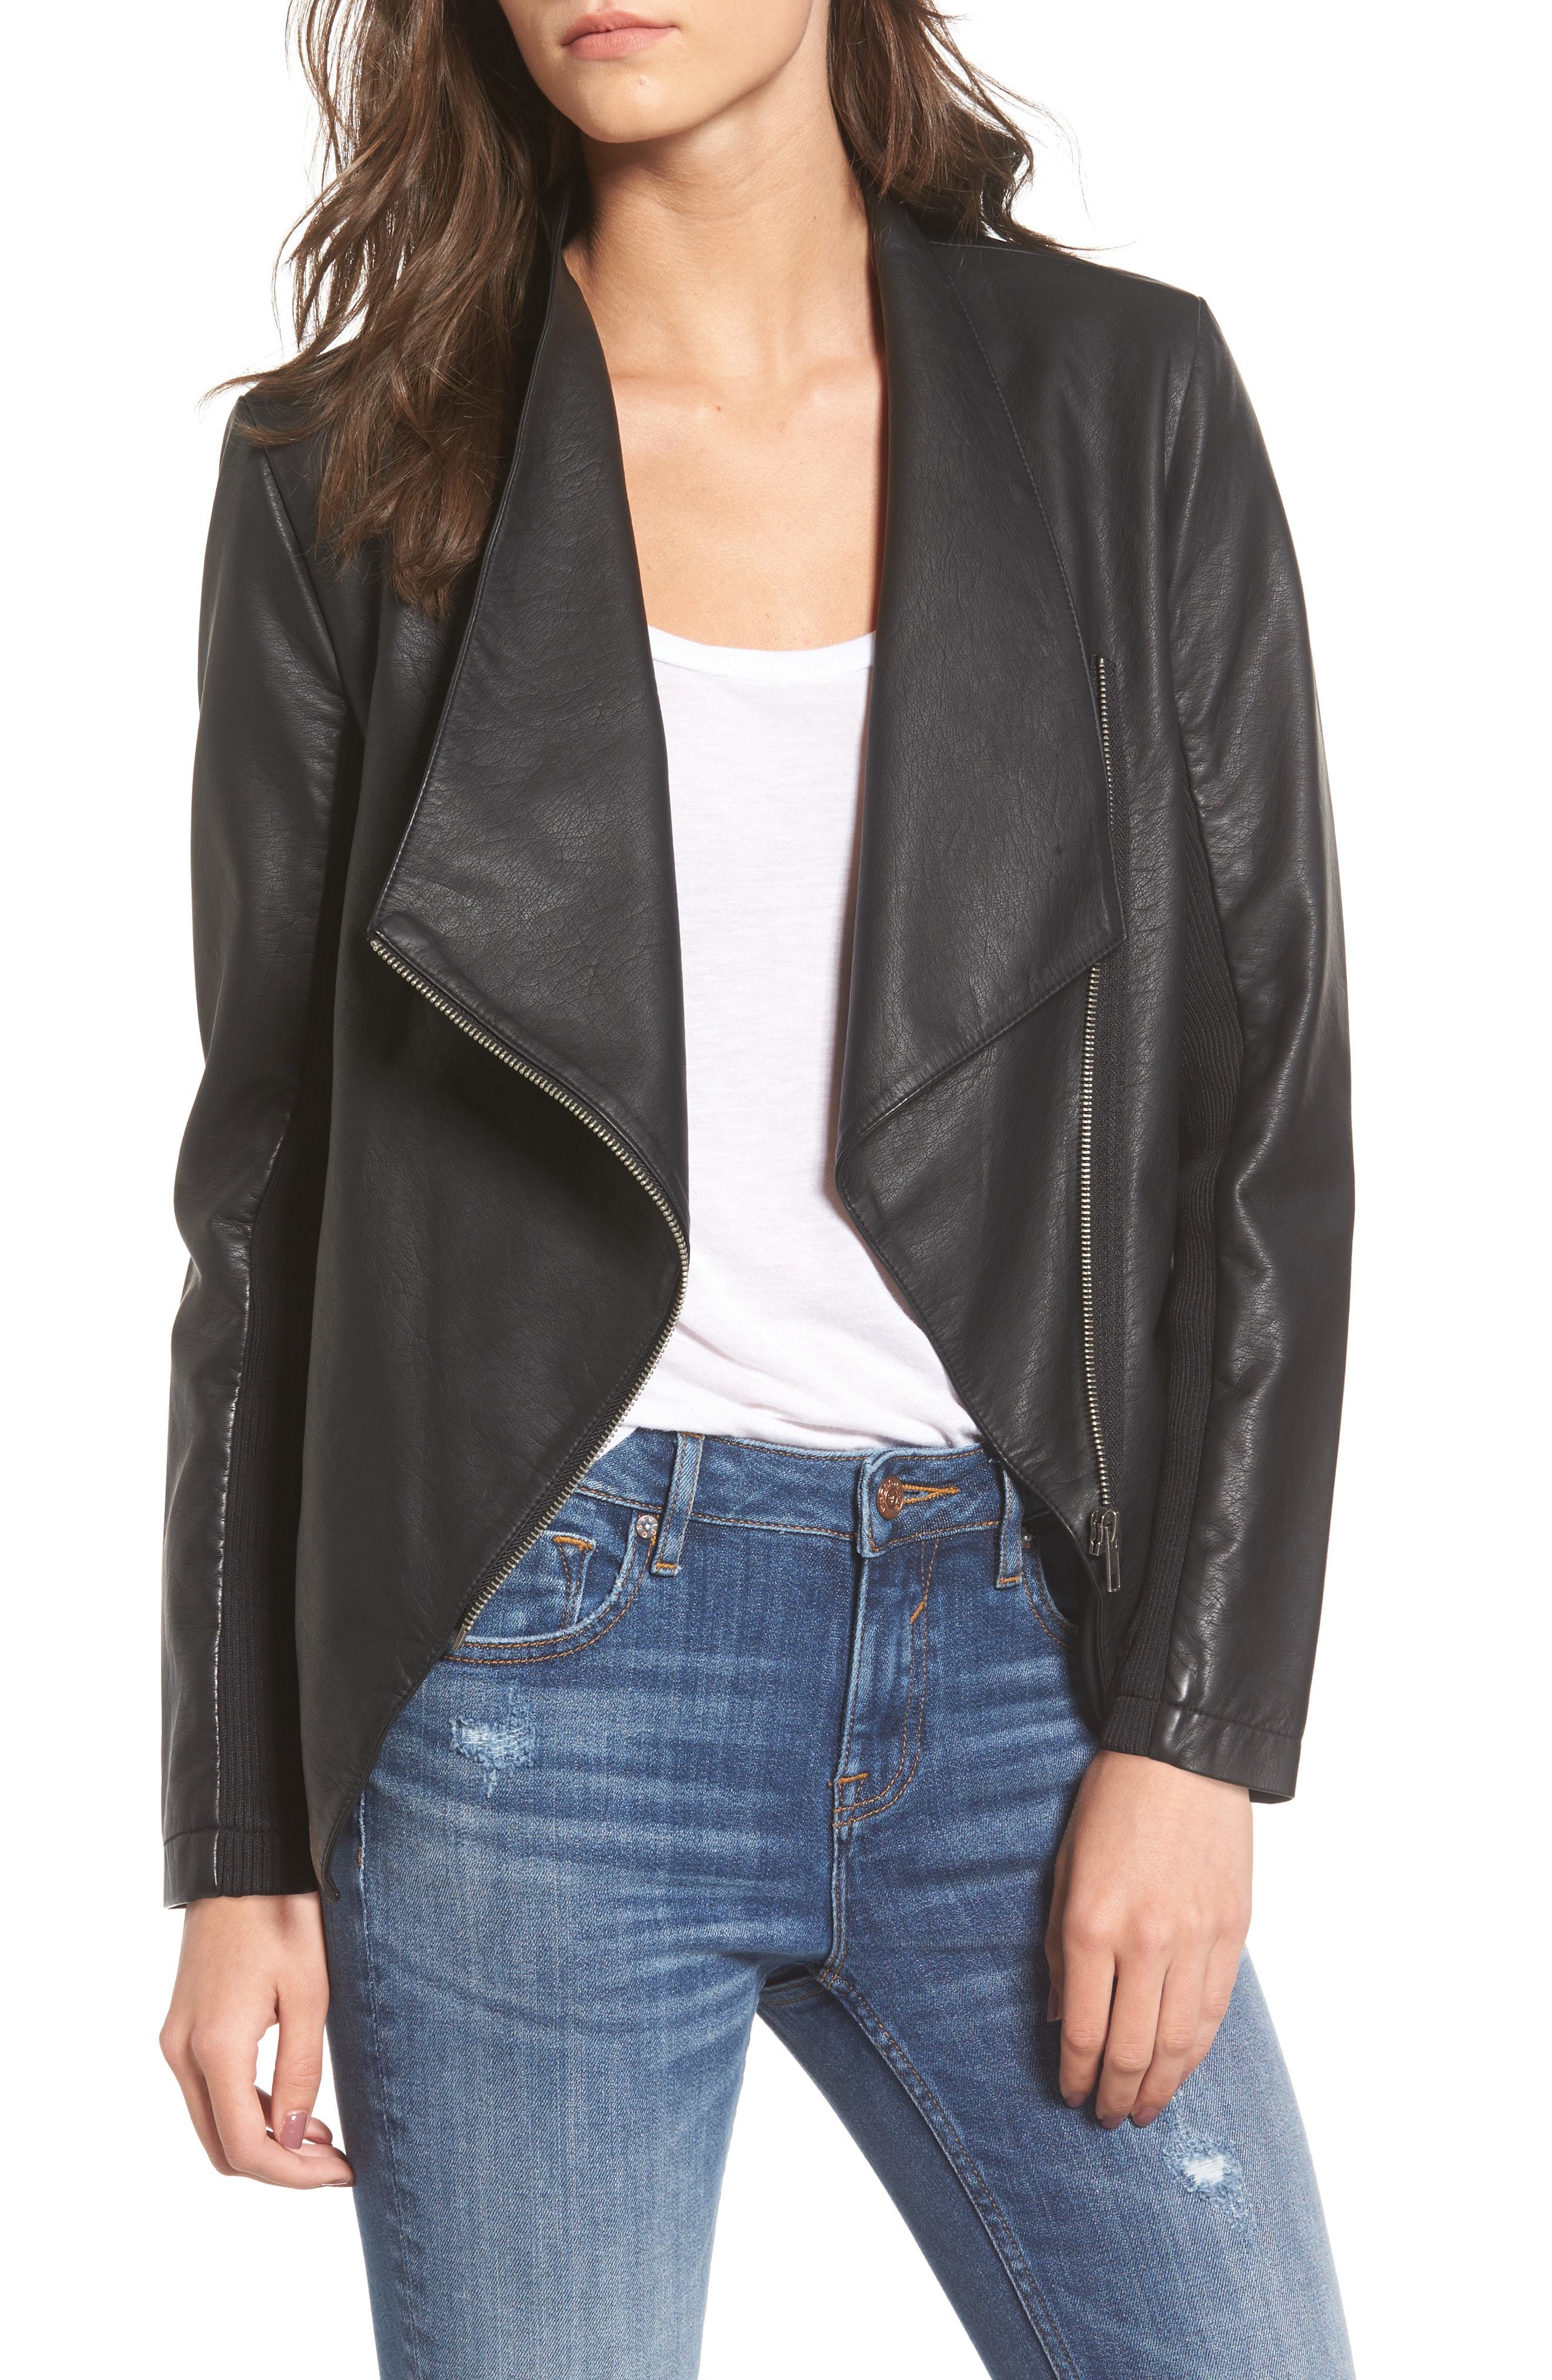 https://cdn.lookastic.com/black-leather-biker-jacket/gabrielle-faux-leather-asymmetrical-jacket-original-9478467.jpg